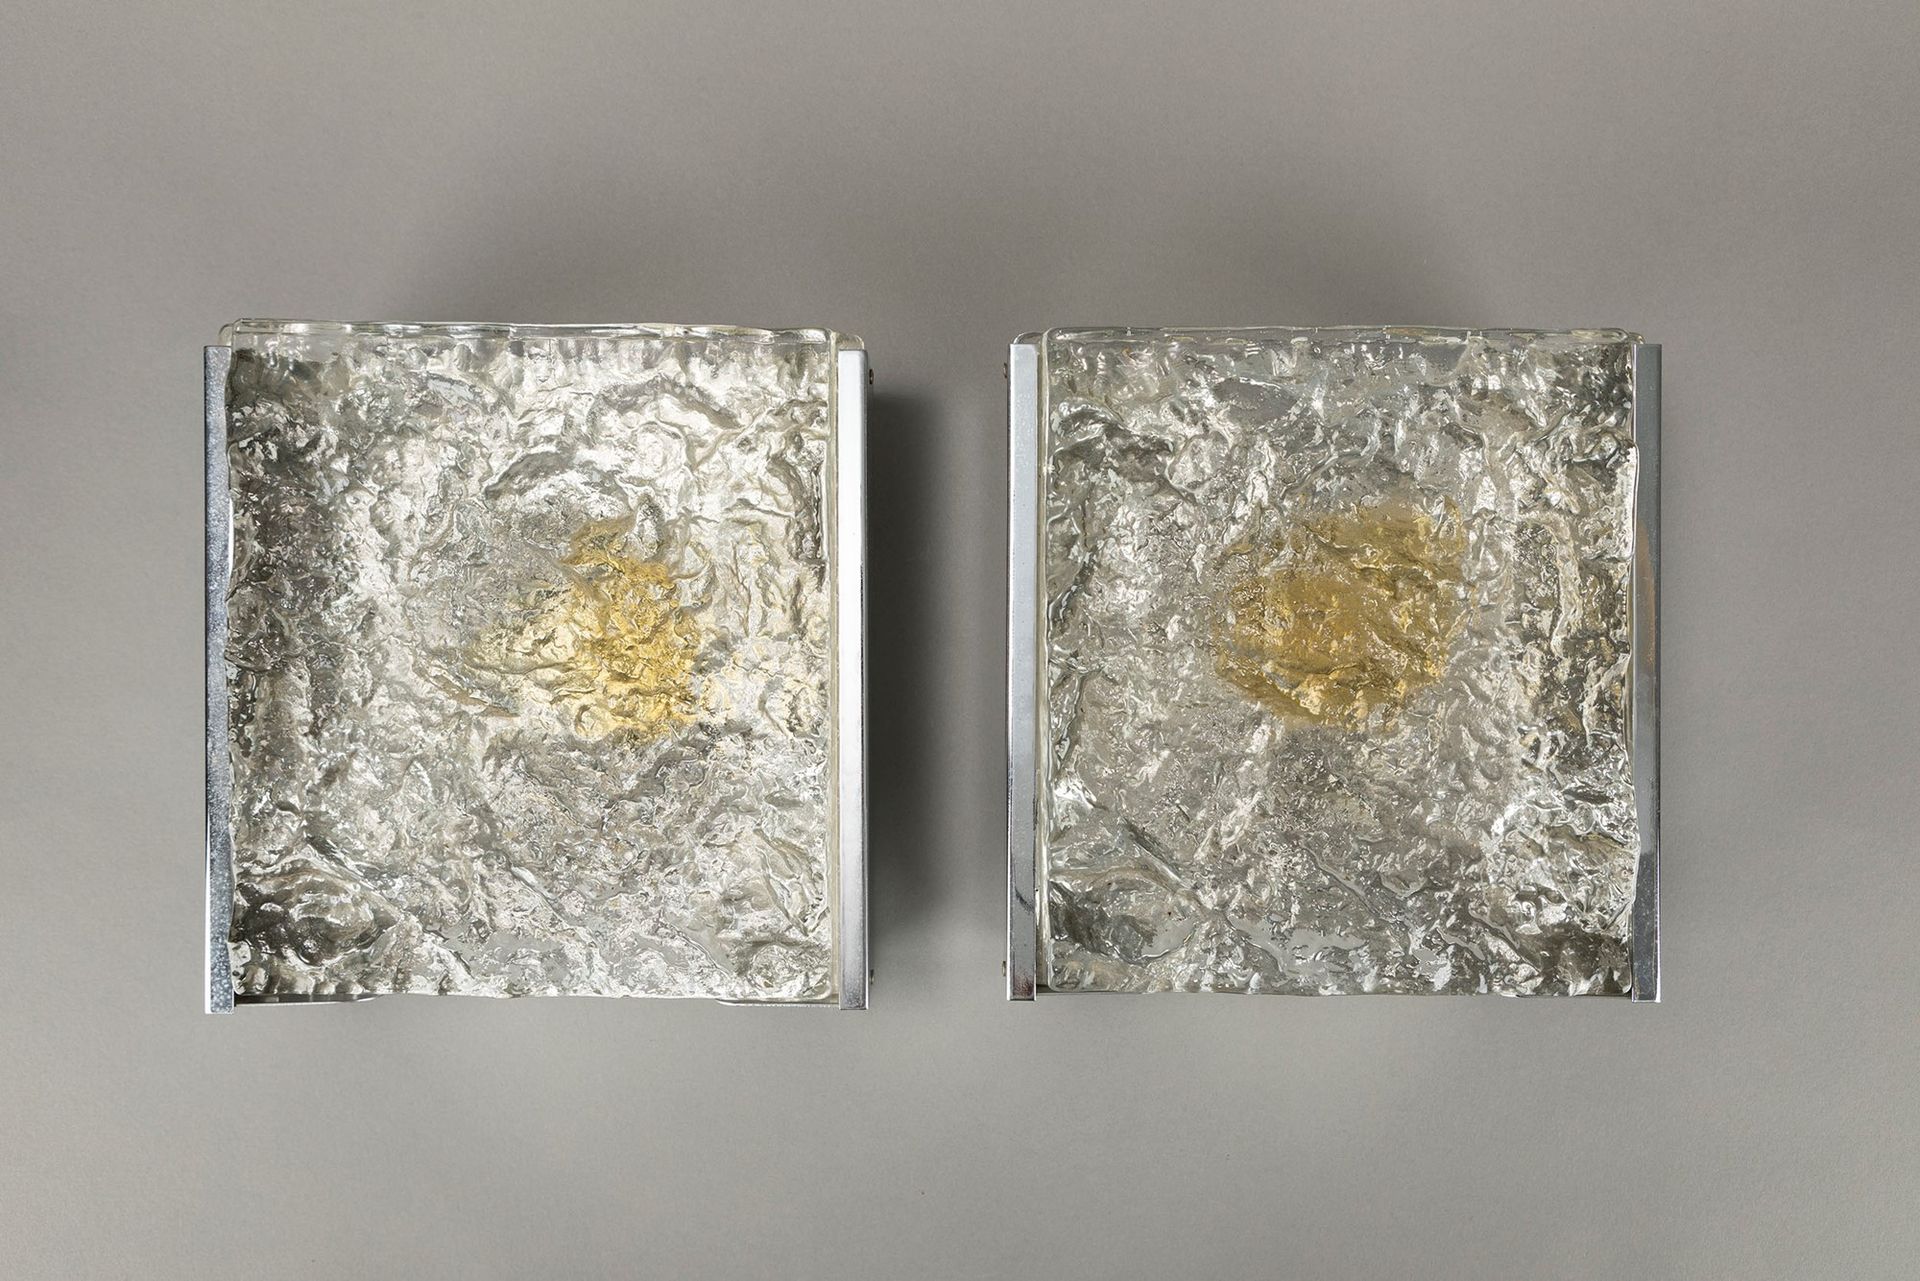 VENINI Zwei Wandleuchter, 1970 ca.

9 x 25 x 20 cm
Metall dickes Muranoglas.